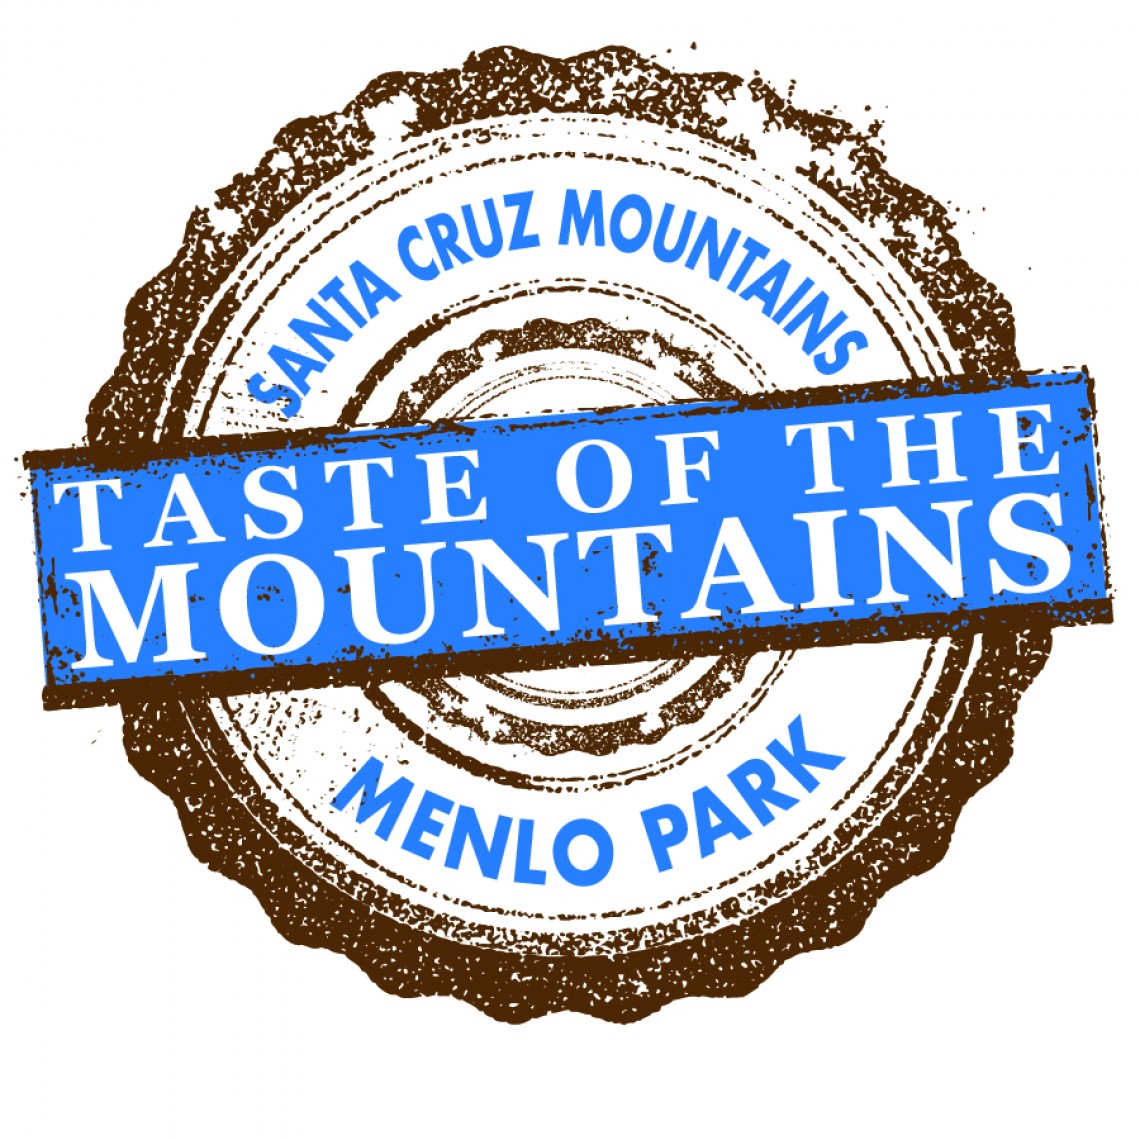 Taste of the Mountains – Menlo Park